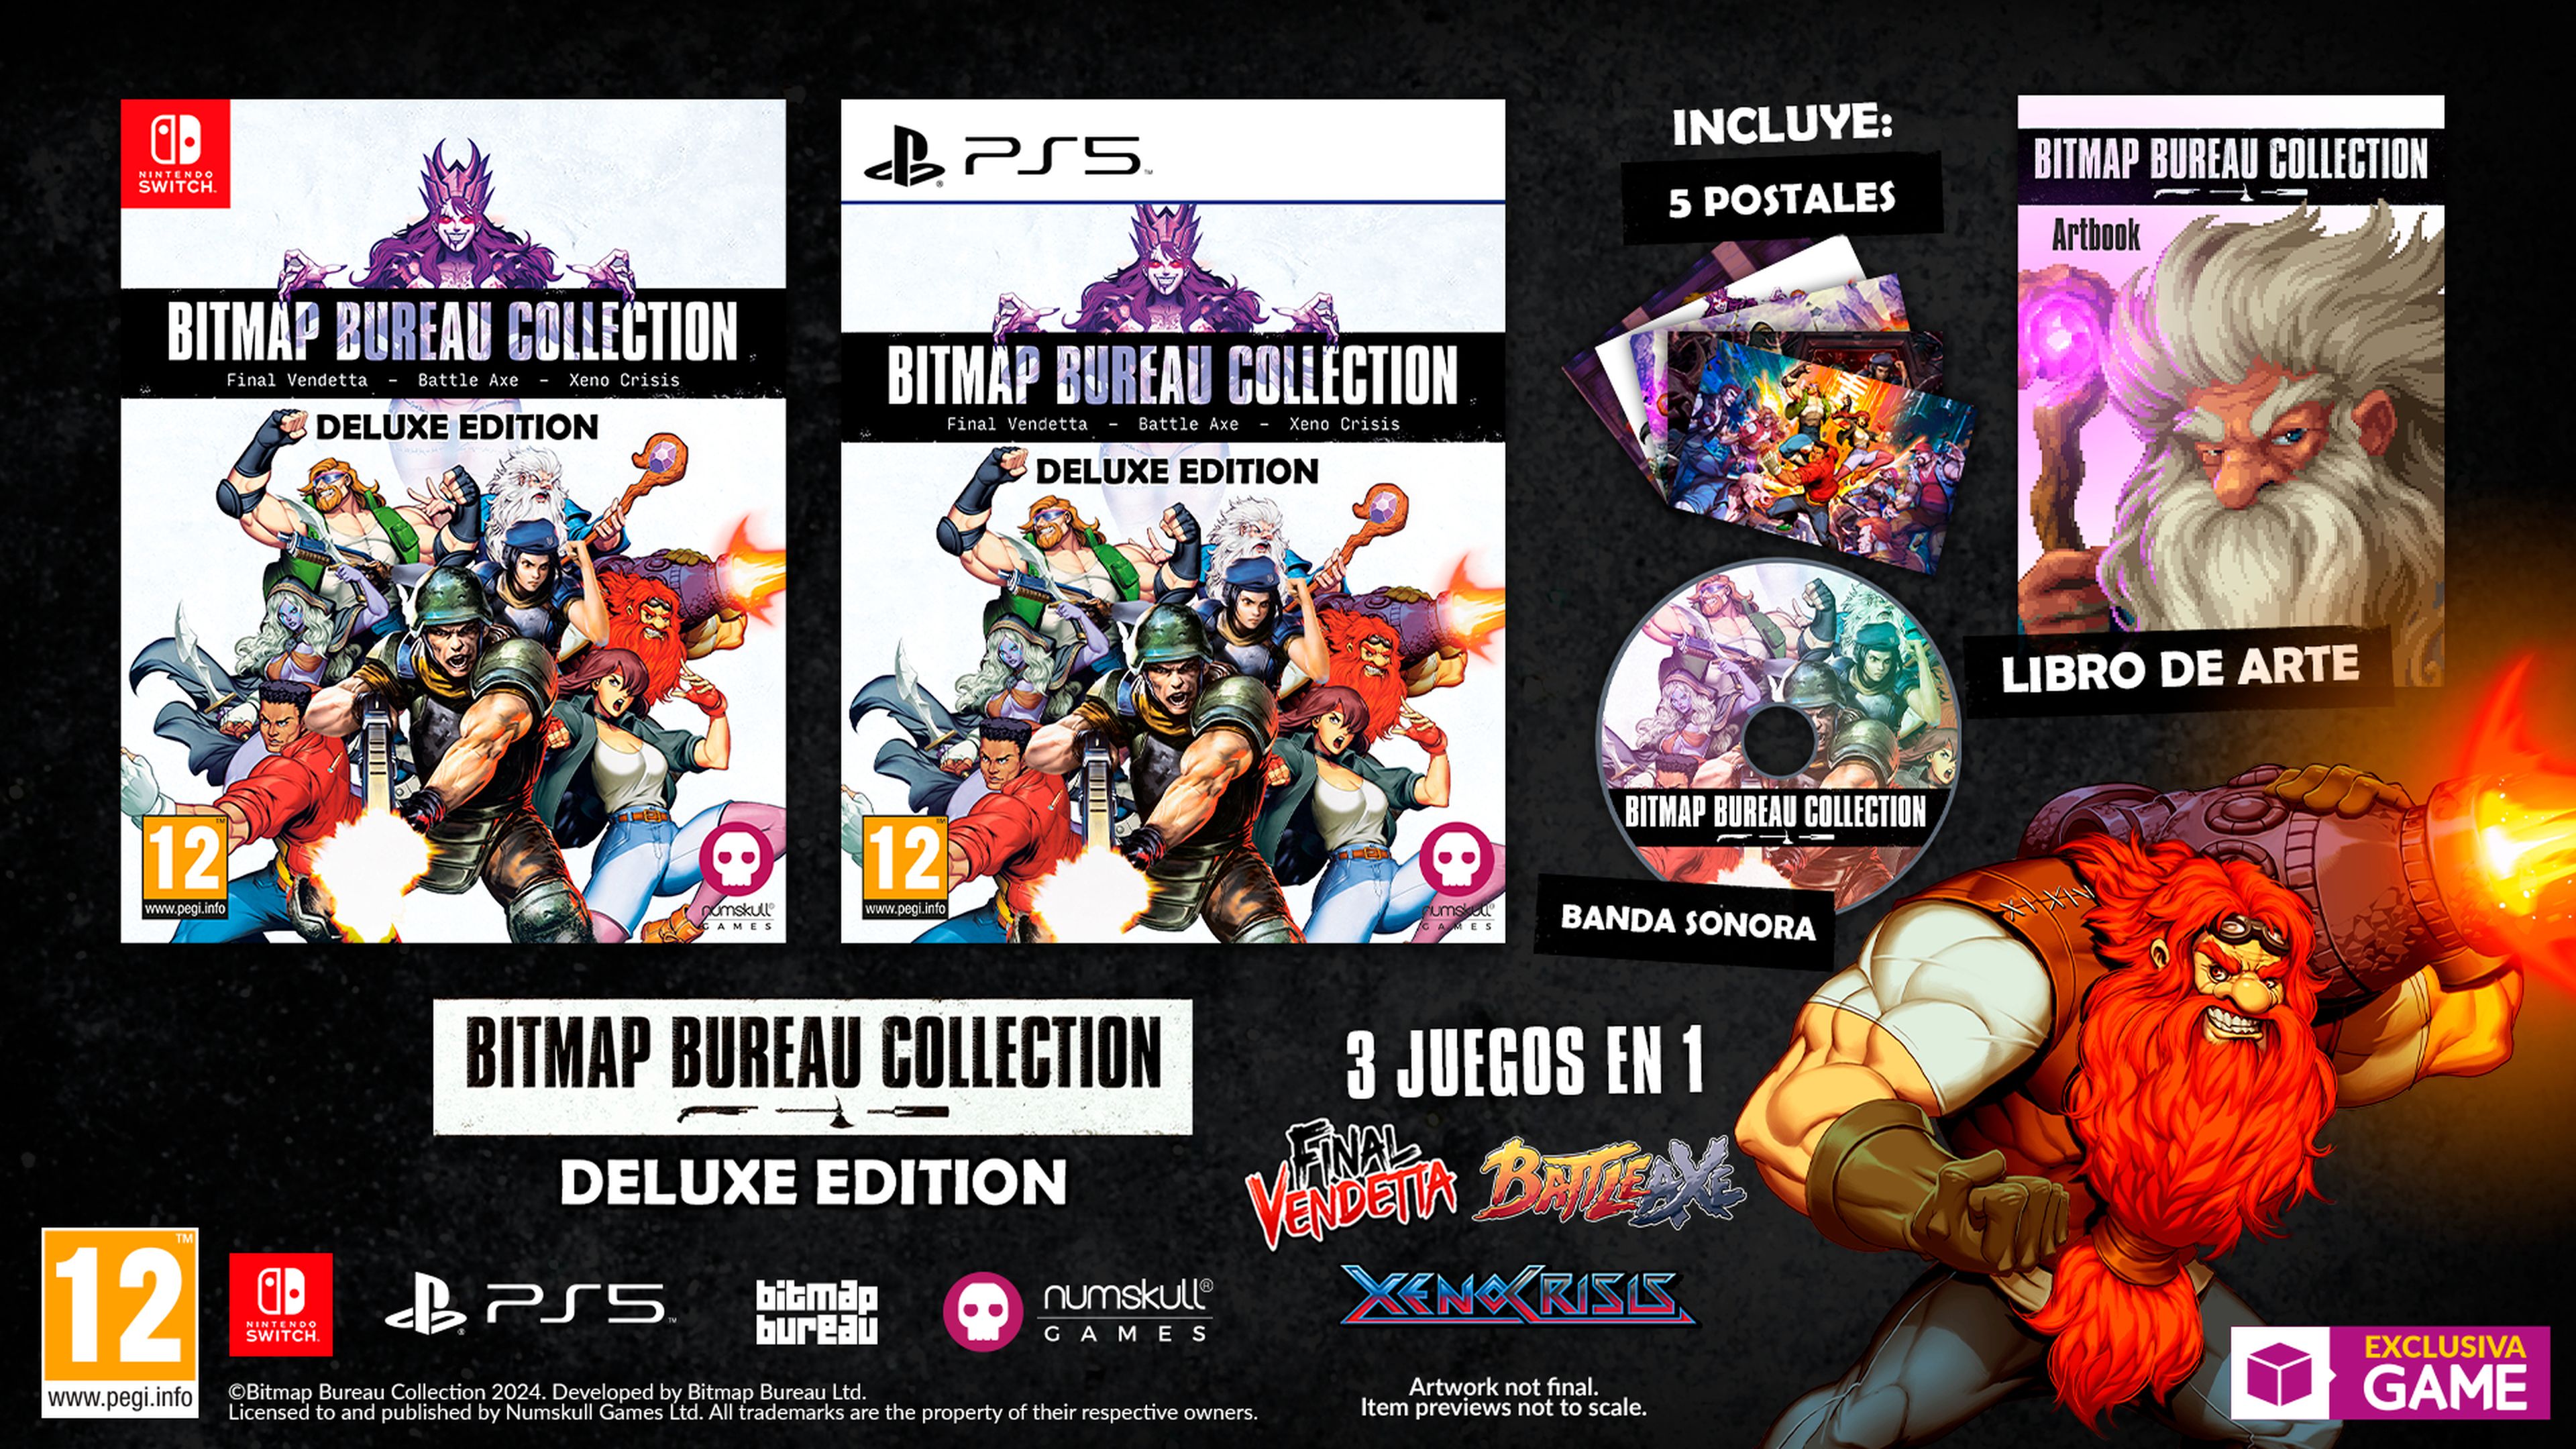 Bitmap Bureau Collection Deluxe Edition exclusiva de GAME